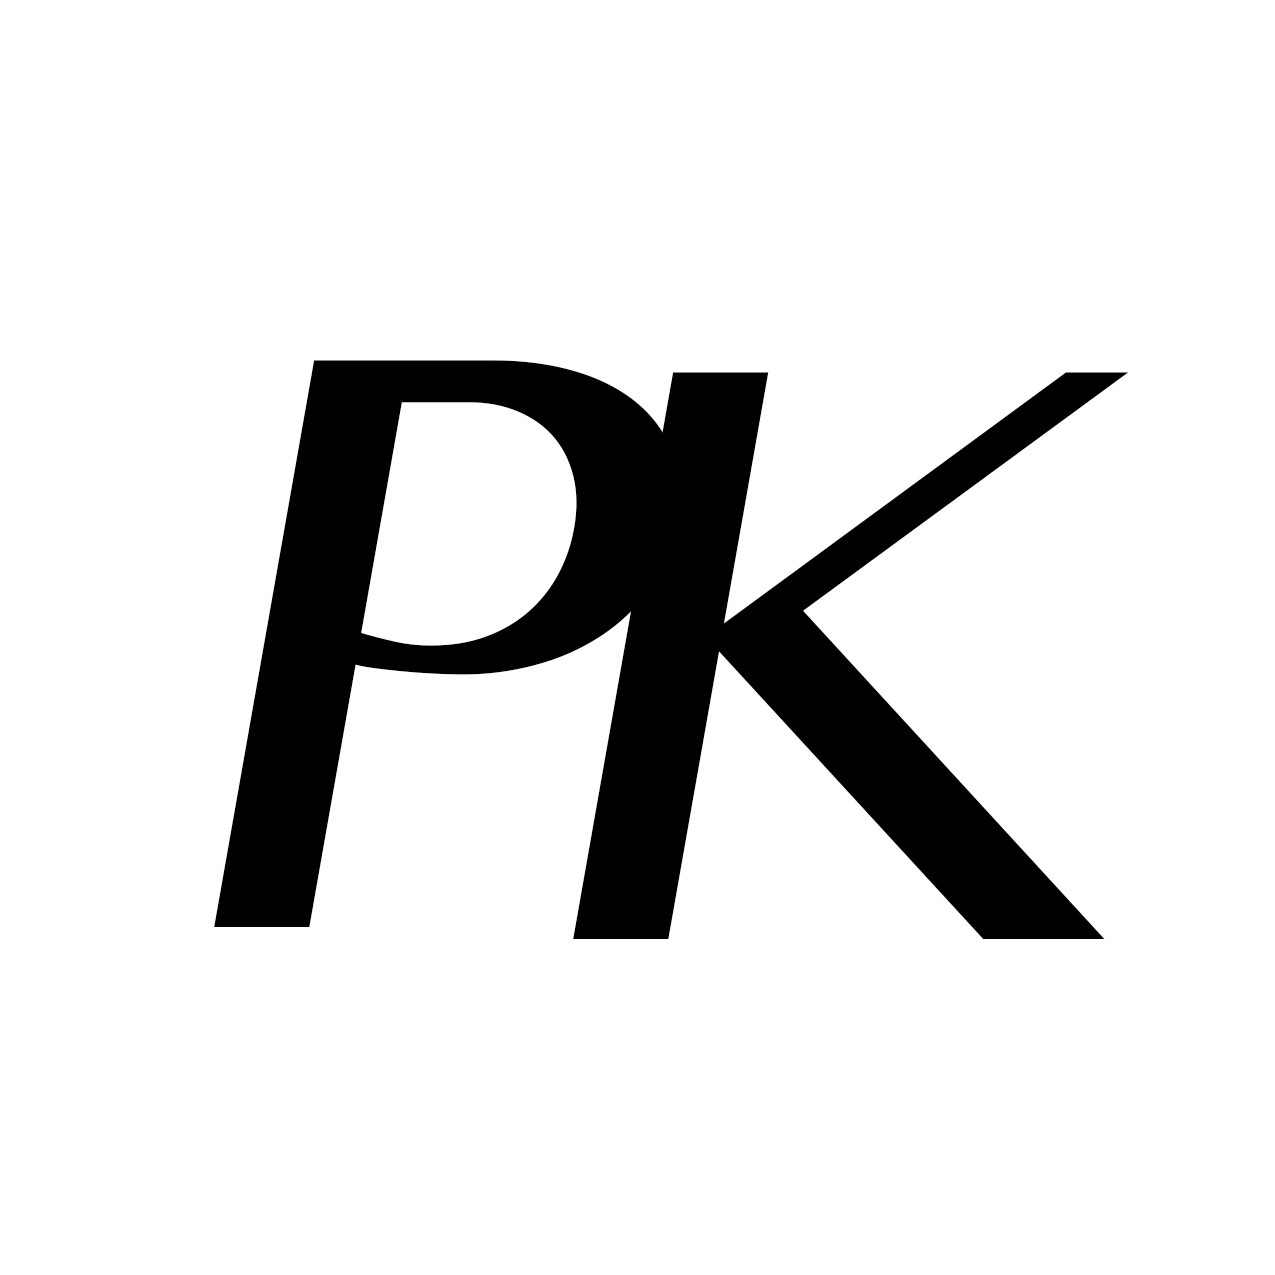 PK Logo Wallpapers - Wallpaper Cave